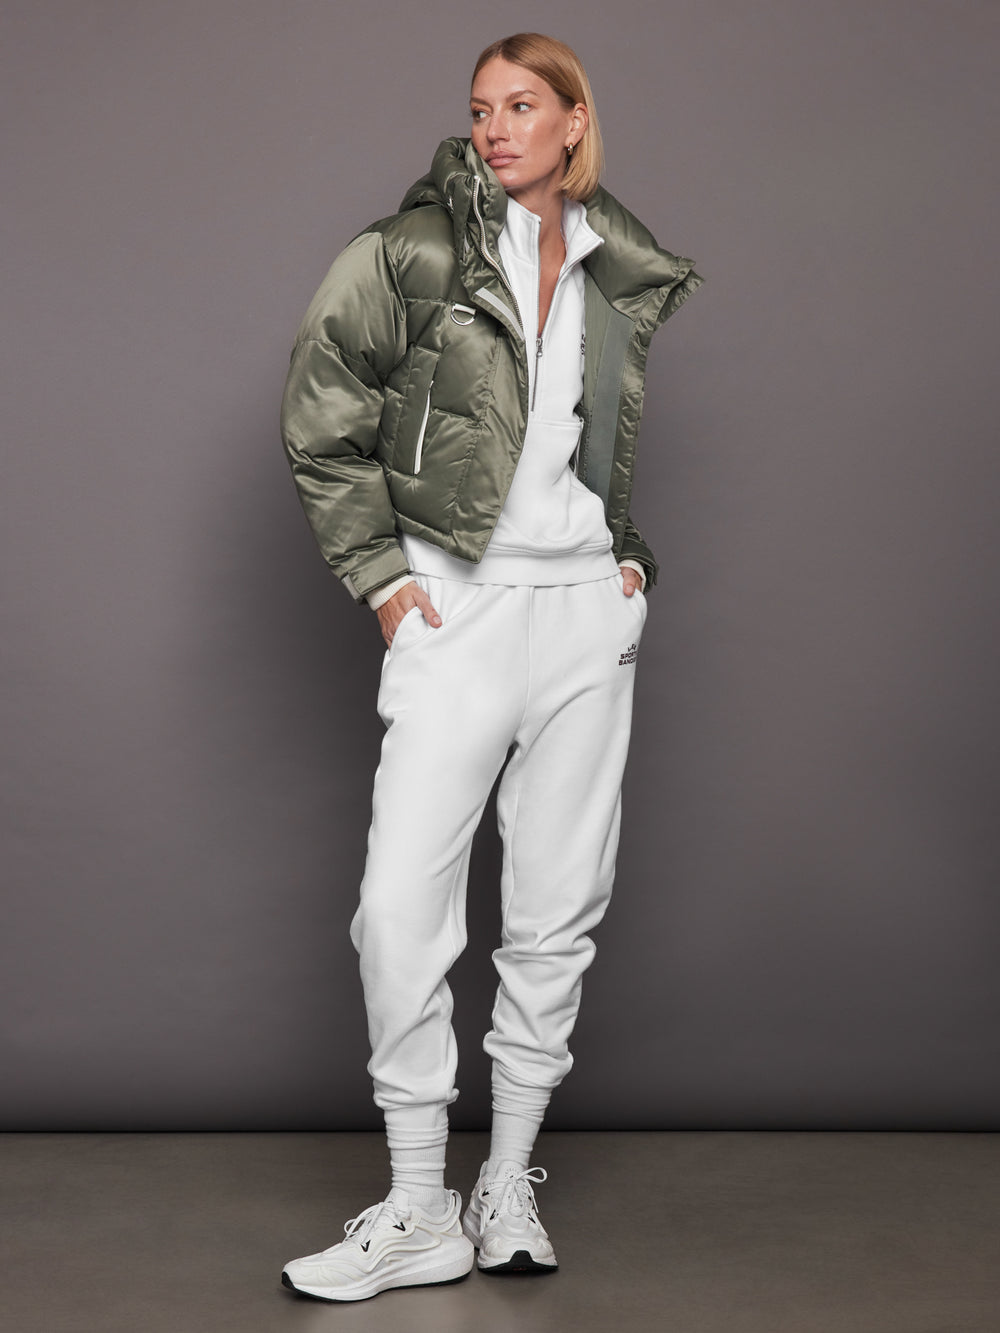 Les Sports Bandier 1/2 Zip Sweatshirt - White/Cordovan